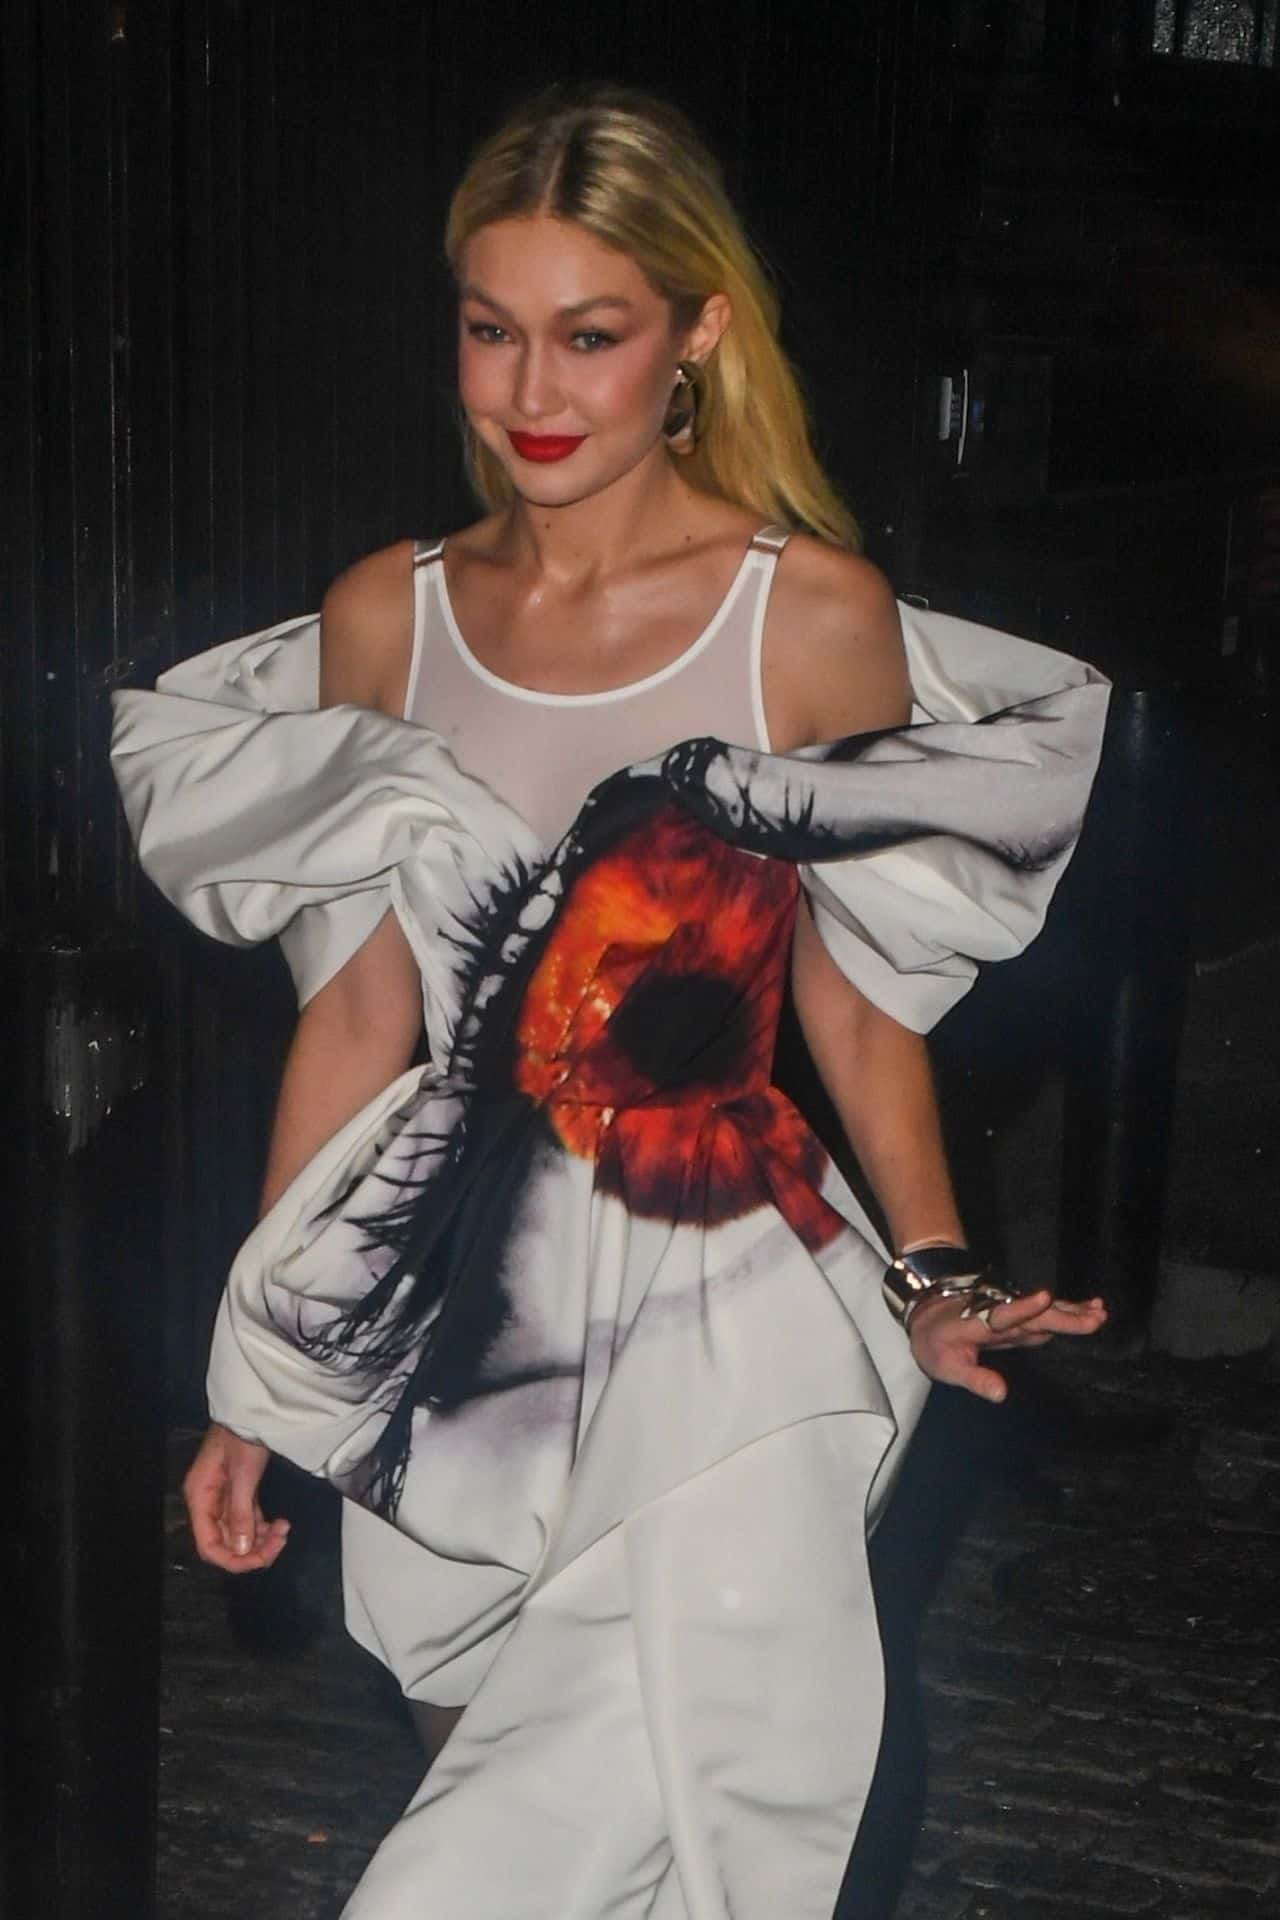 Gigi Hadid in Chic White Mini Dress at "Next in Fashion" Season 2 Party